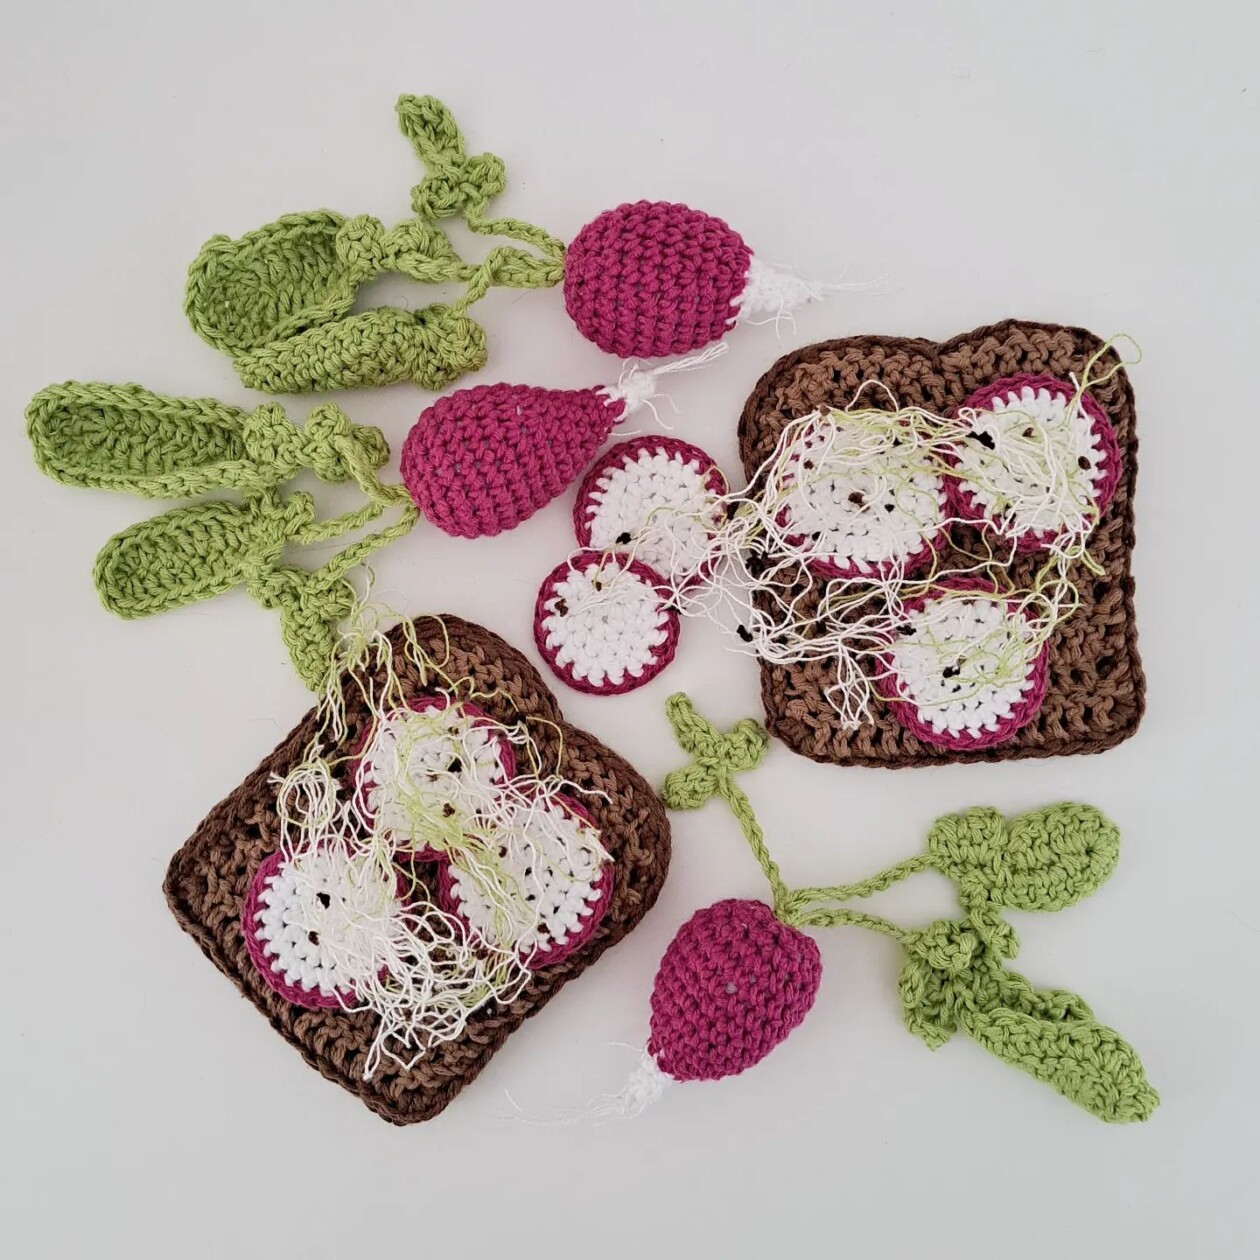 Whimsical Food Crochet Sculptures By Maria Skog (5)